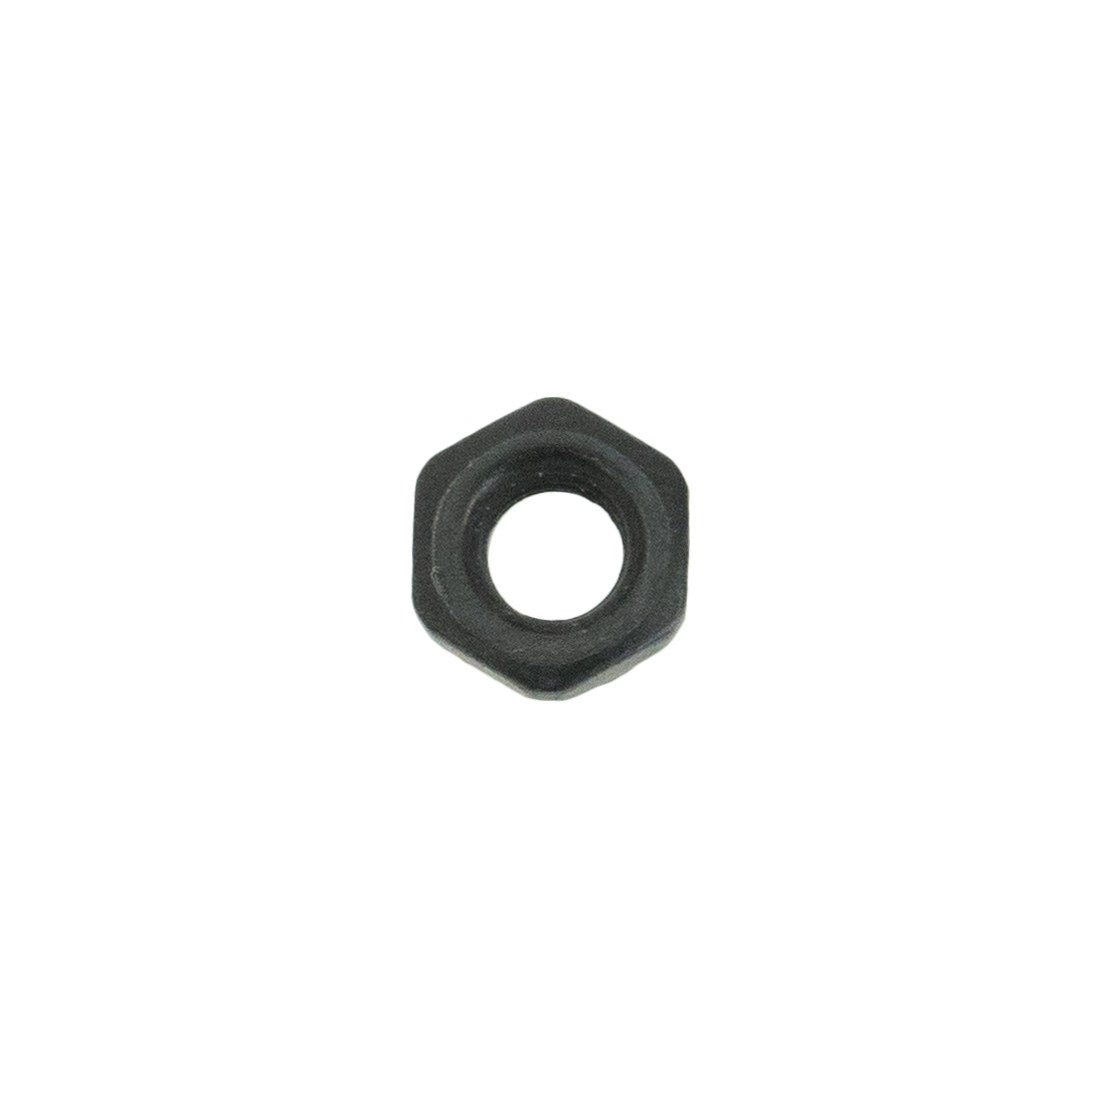 XERO Clamp Nylon Nut - 10 Pack Top View